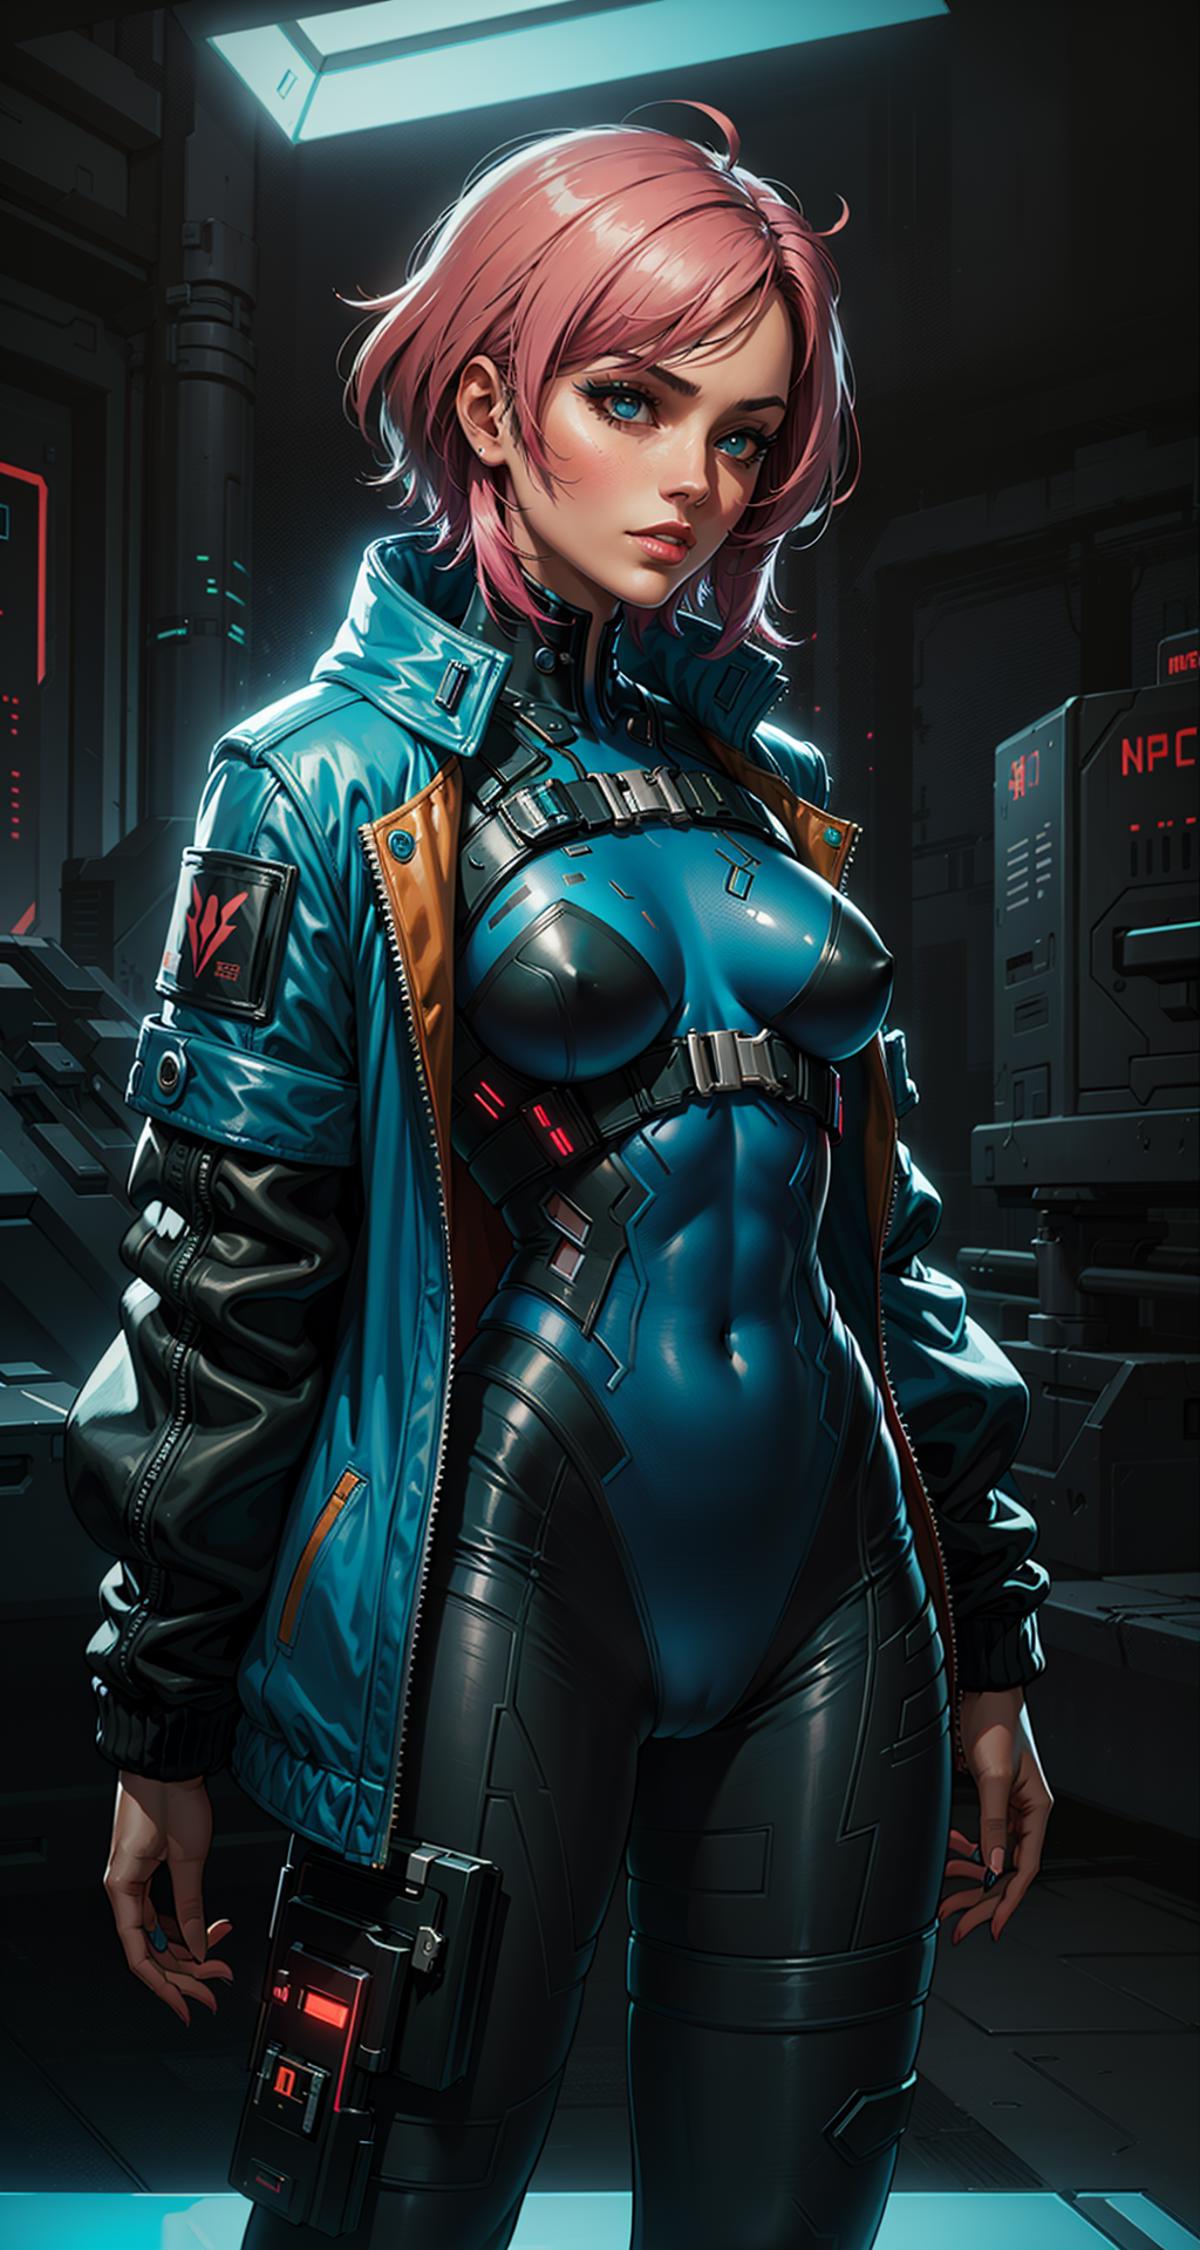 Cyberpunk Bodysuit image by Roscosmos